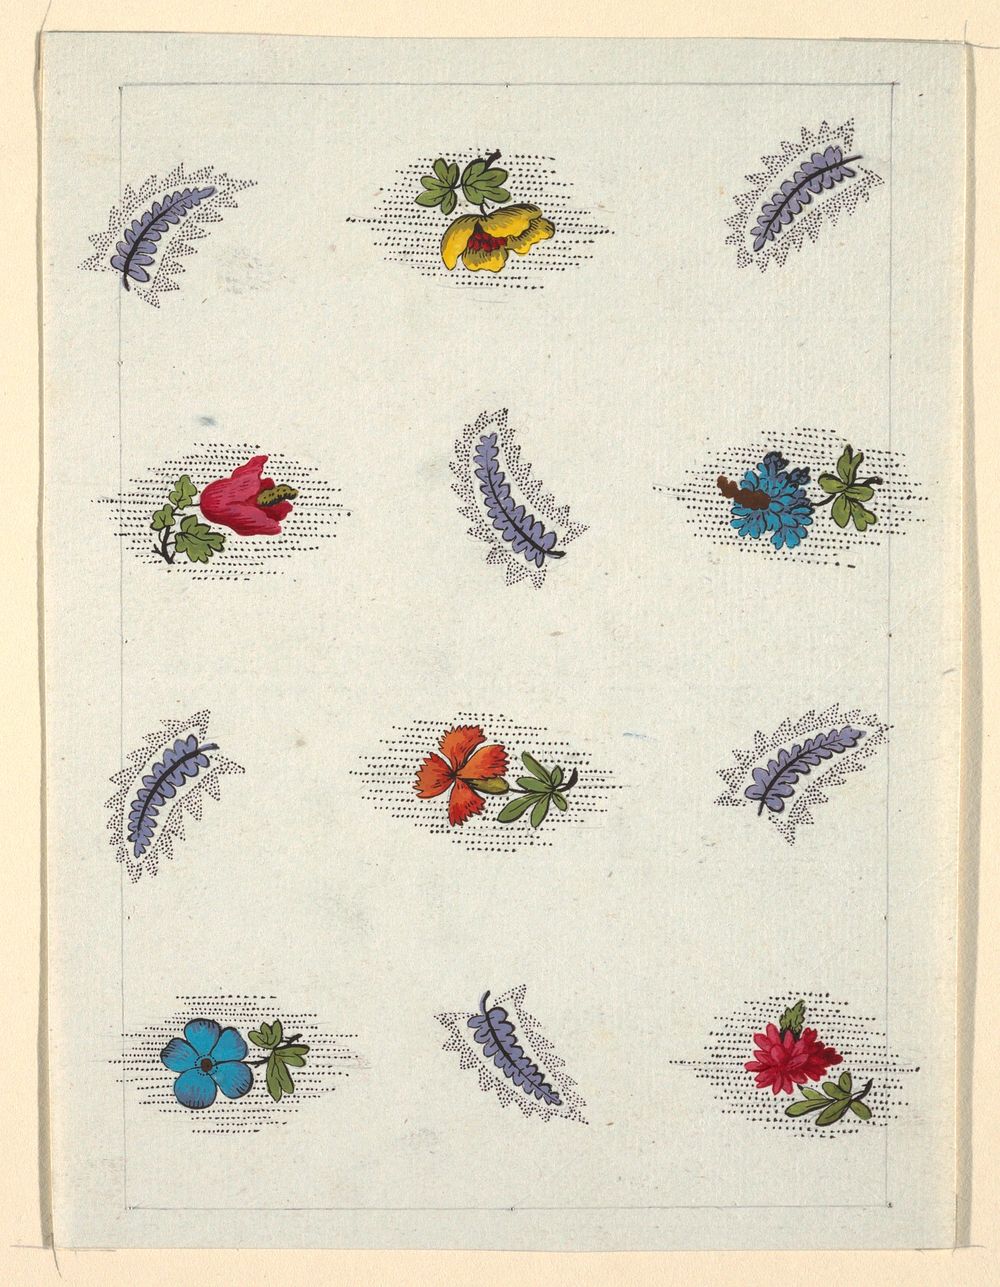 Floral design for printed textile (1800&ndash;1818) by Louis-Albert DuBois.  